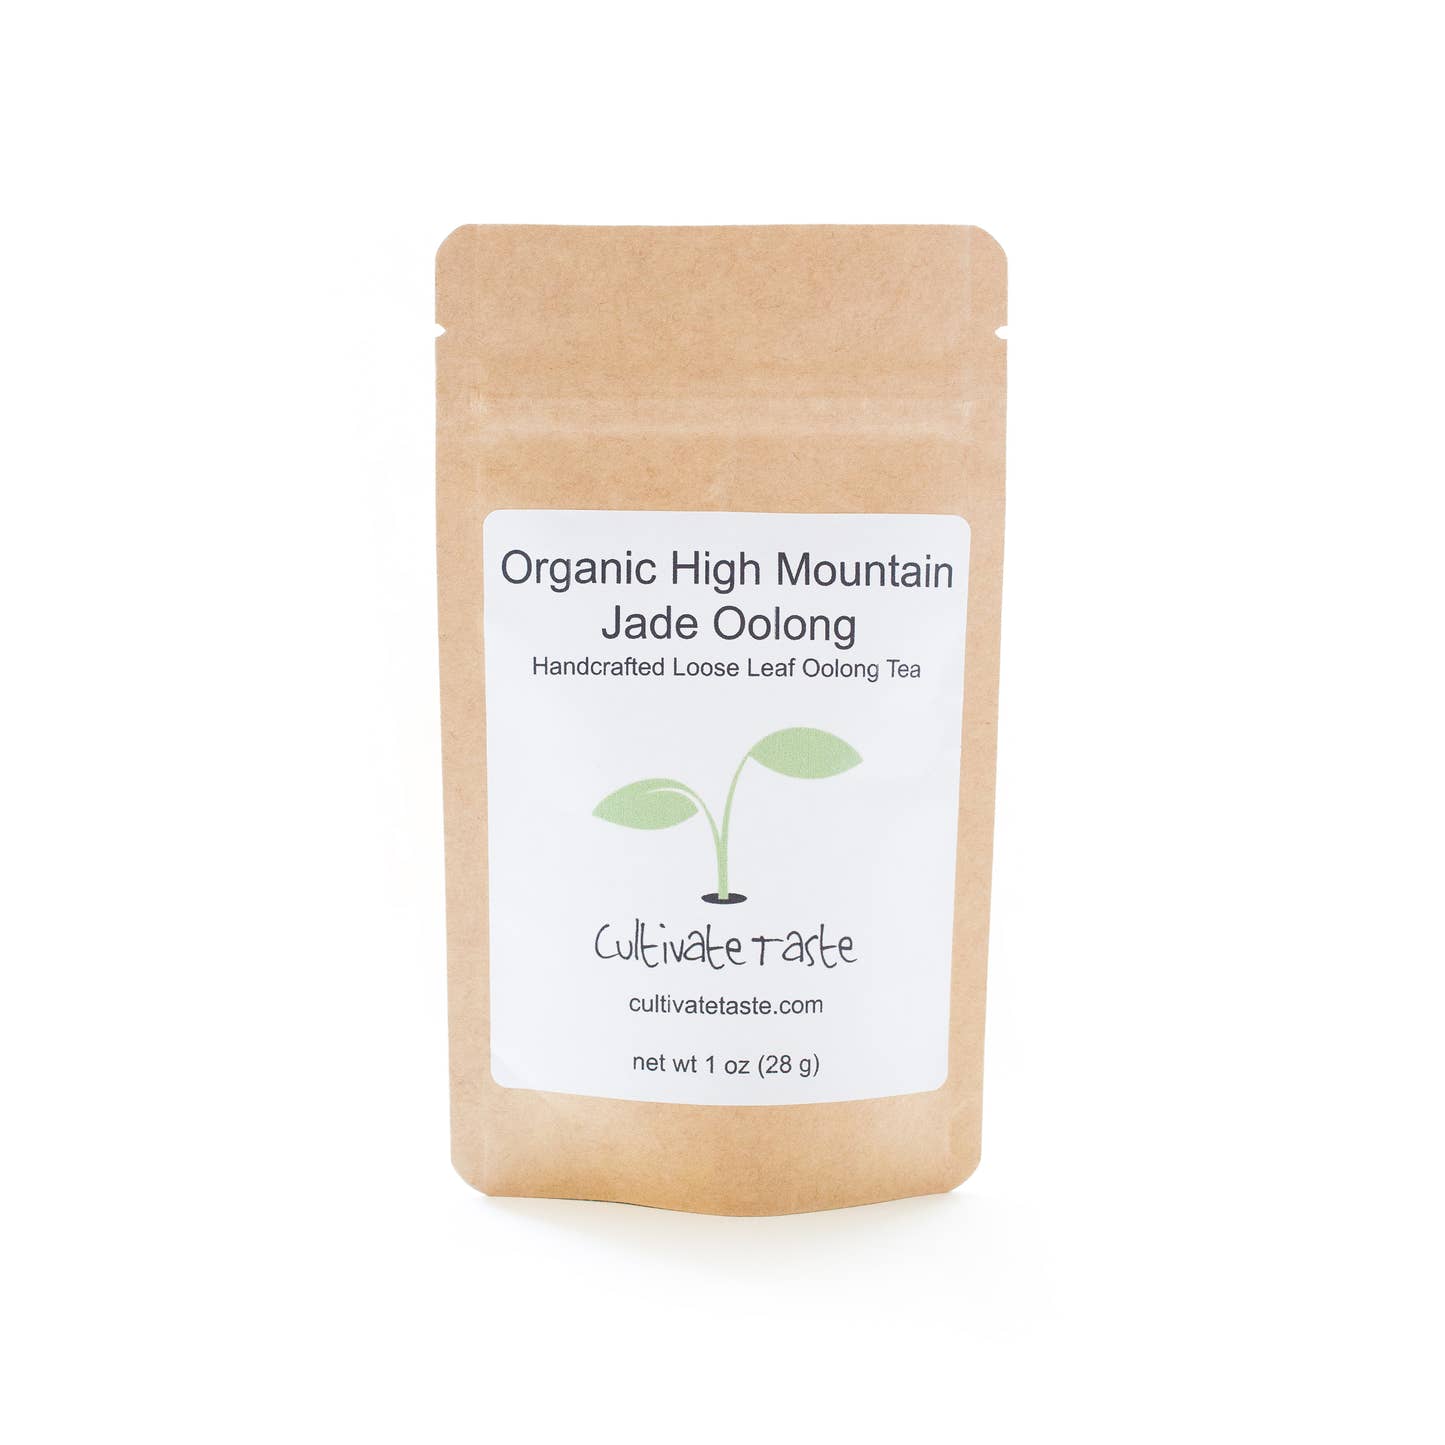 Organic High Mountain Jade Oolong